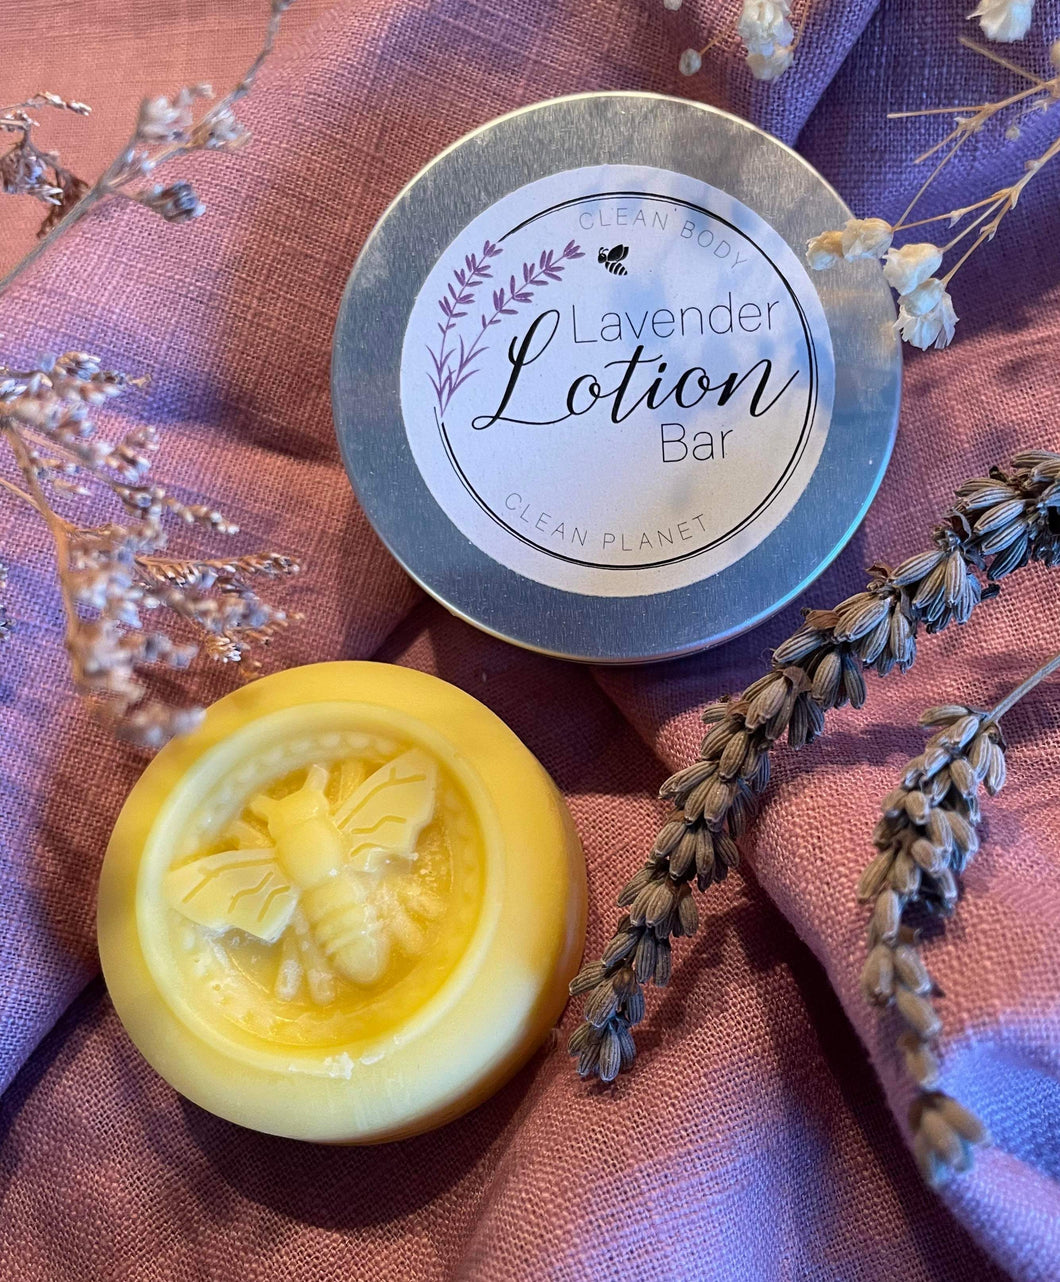 All Natural Beeswax Lavender Lotion Bar